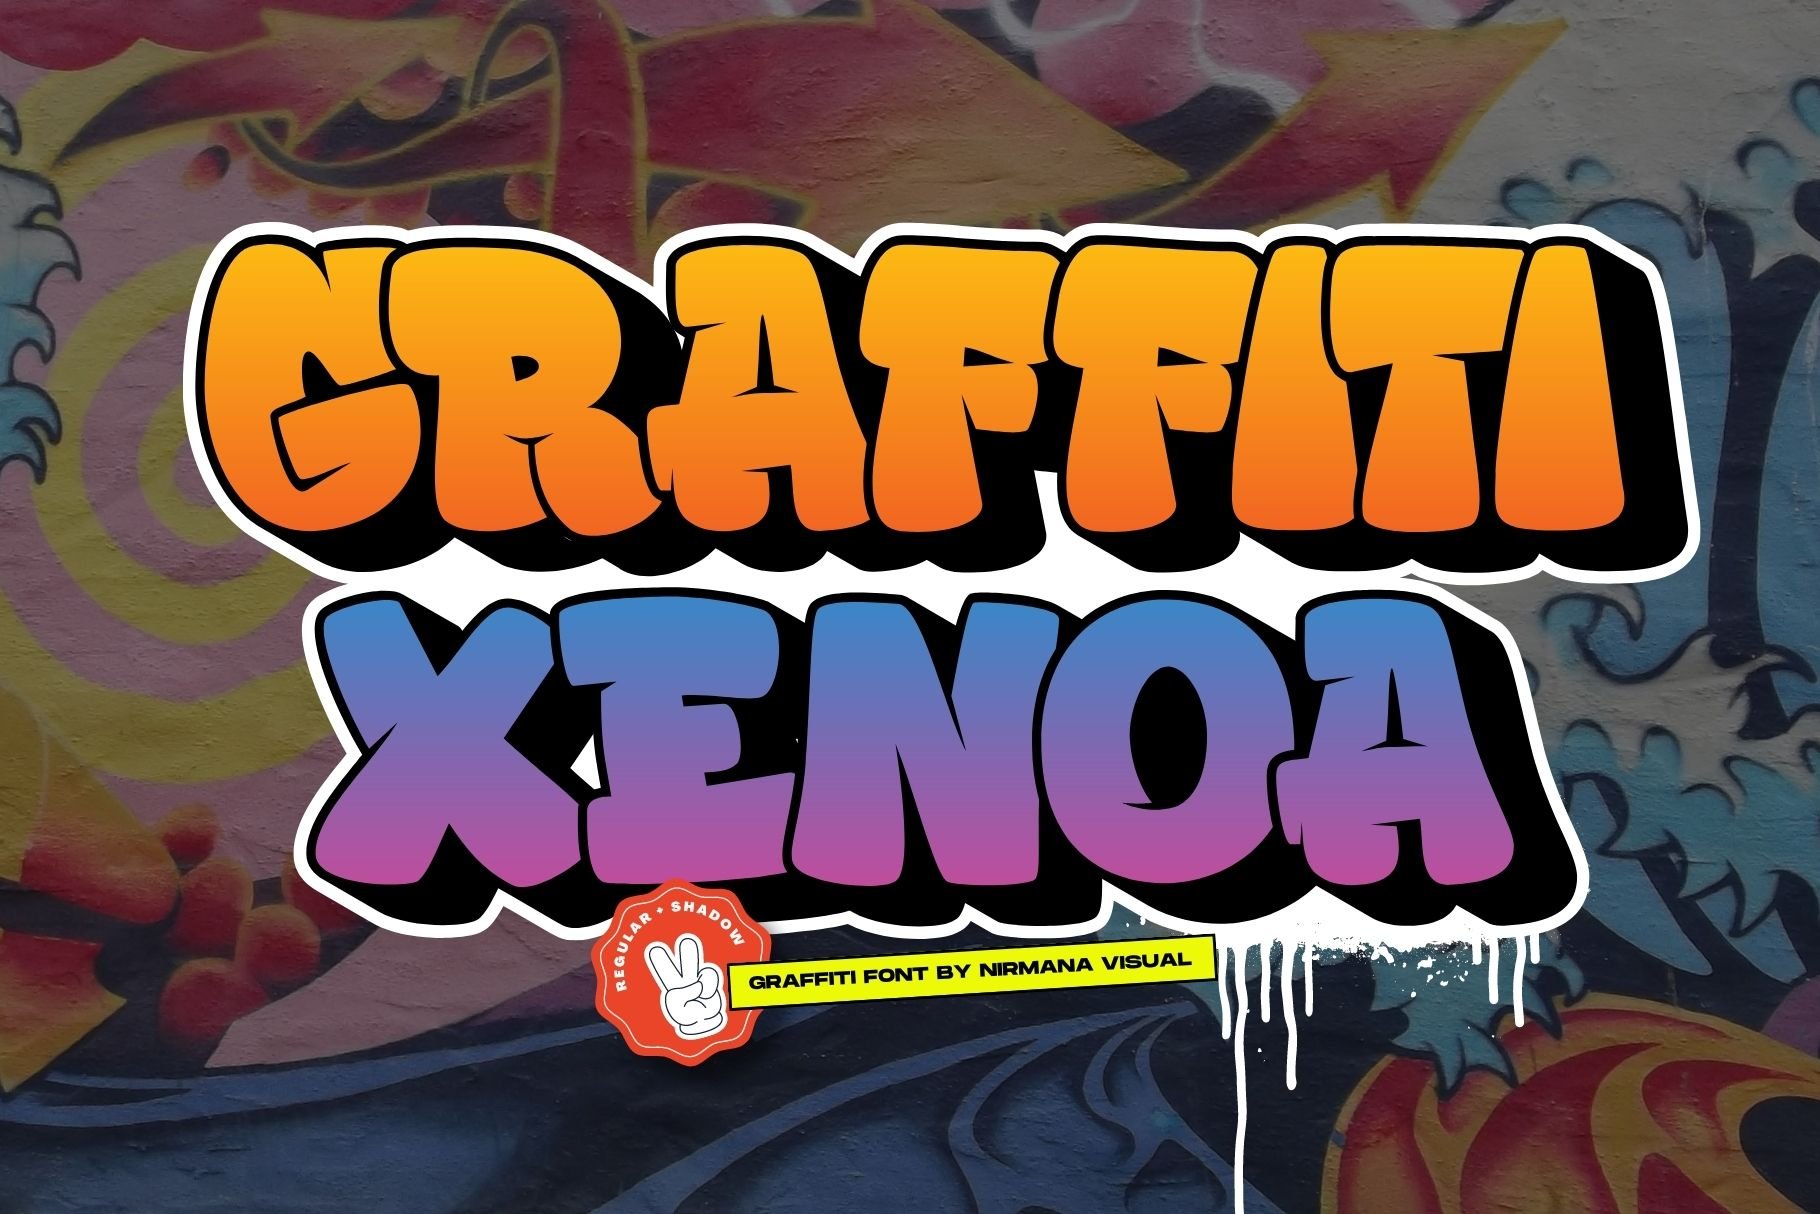 Graffiti Xenoa - Graffiti Bombing cover image.